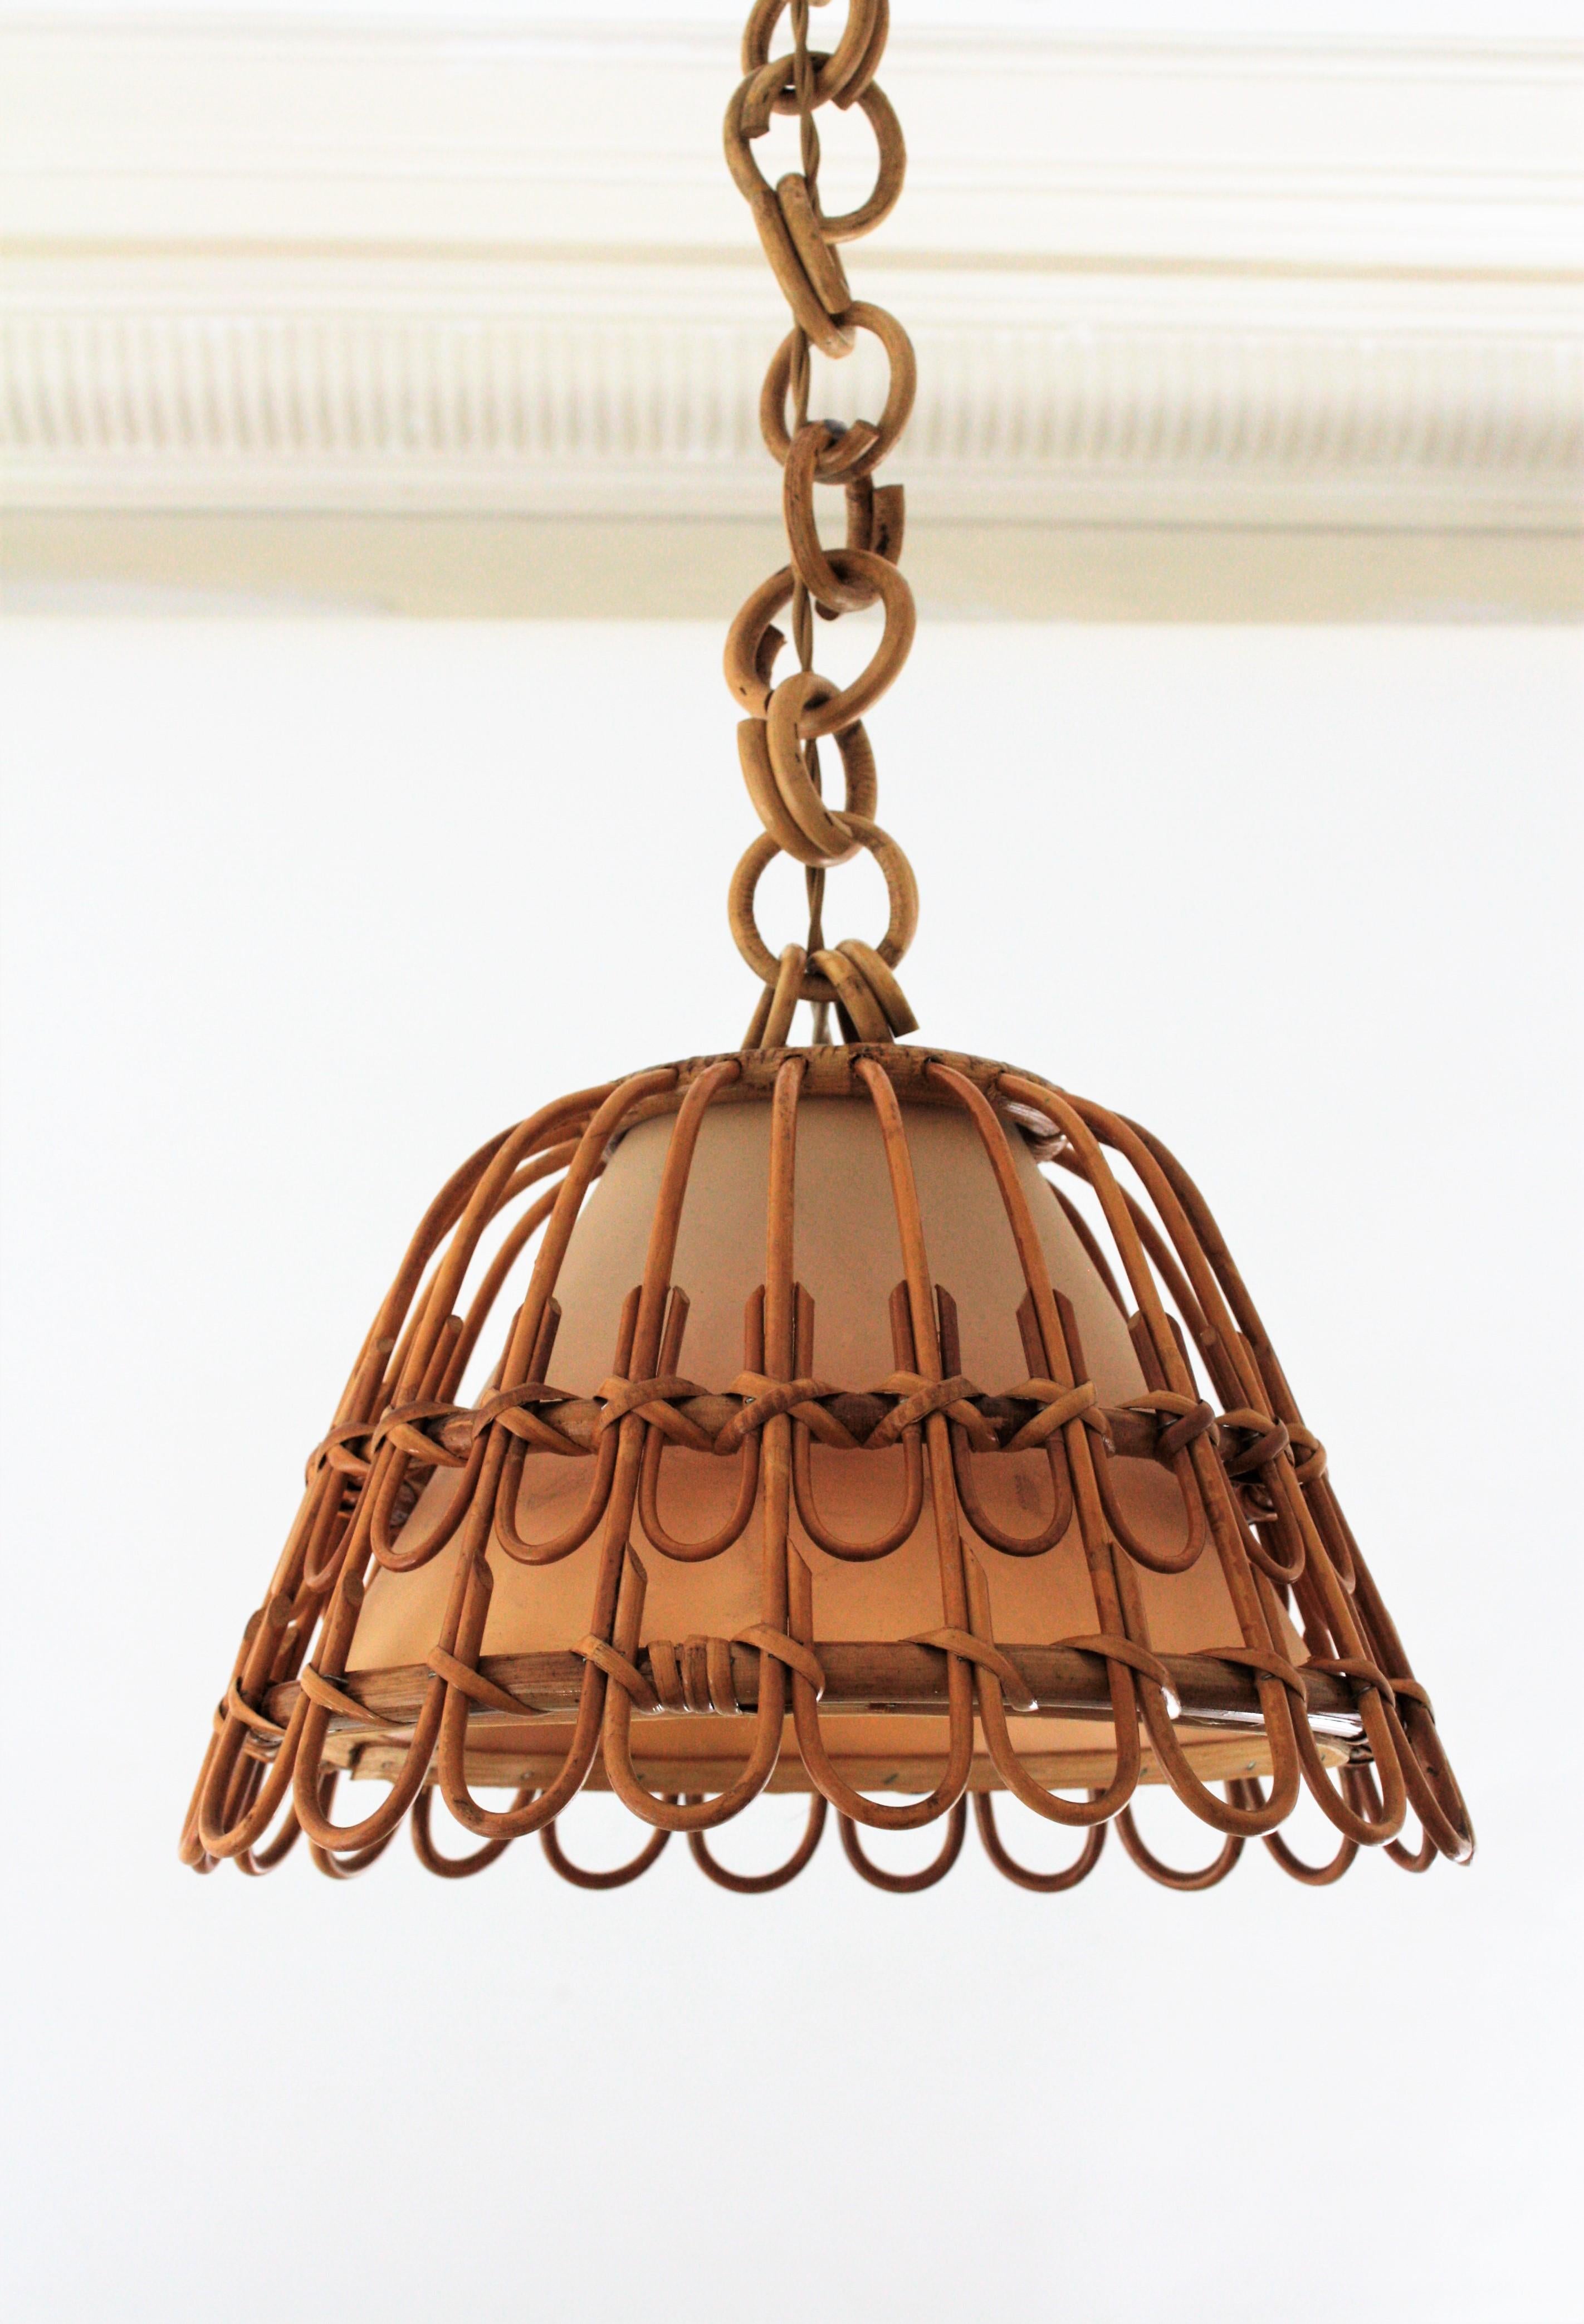 Spanish Wicker and Rattan Pendant Hanging Lamp, Mid-Century Modern Period 2